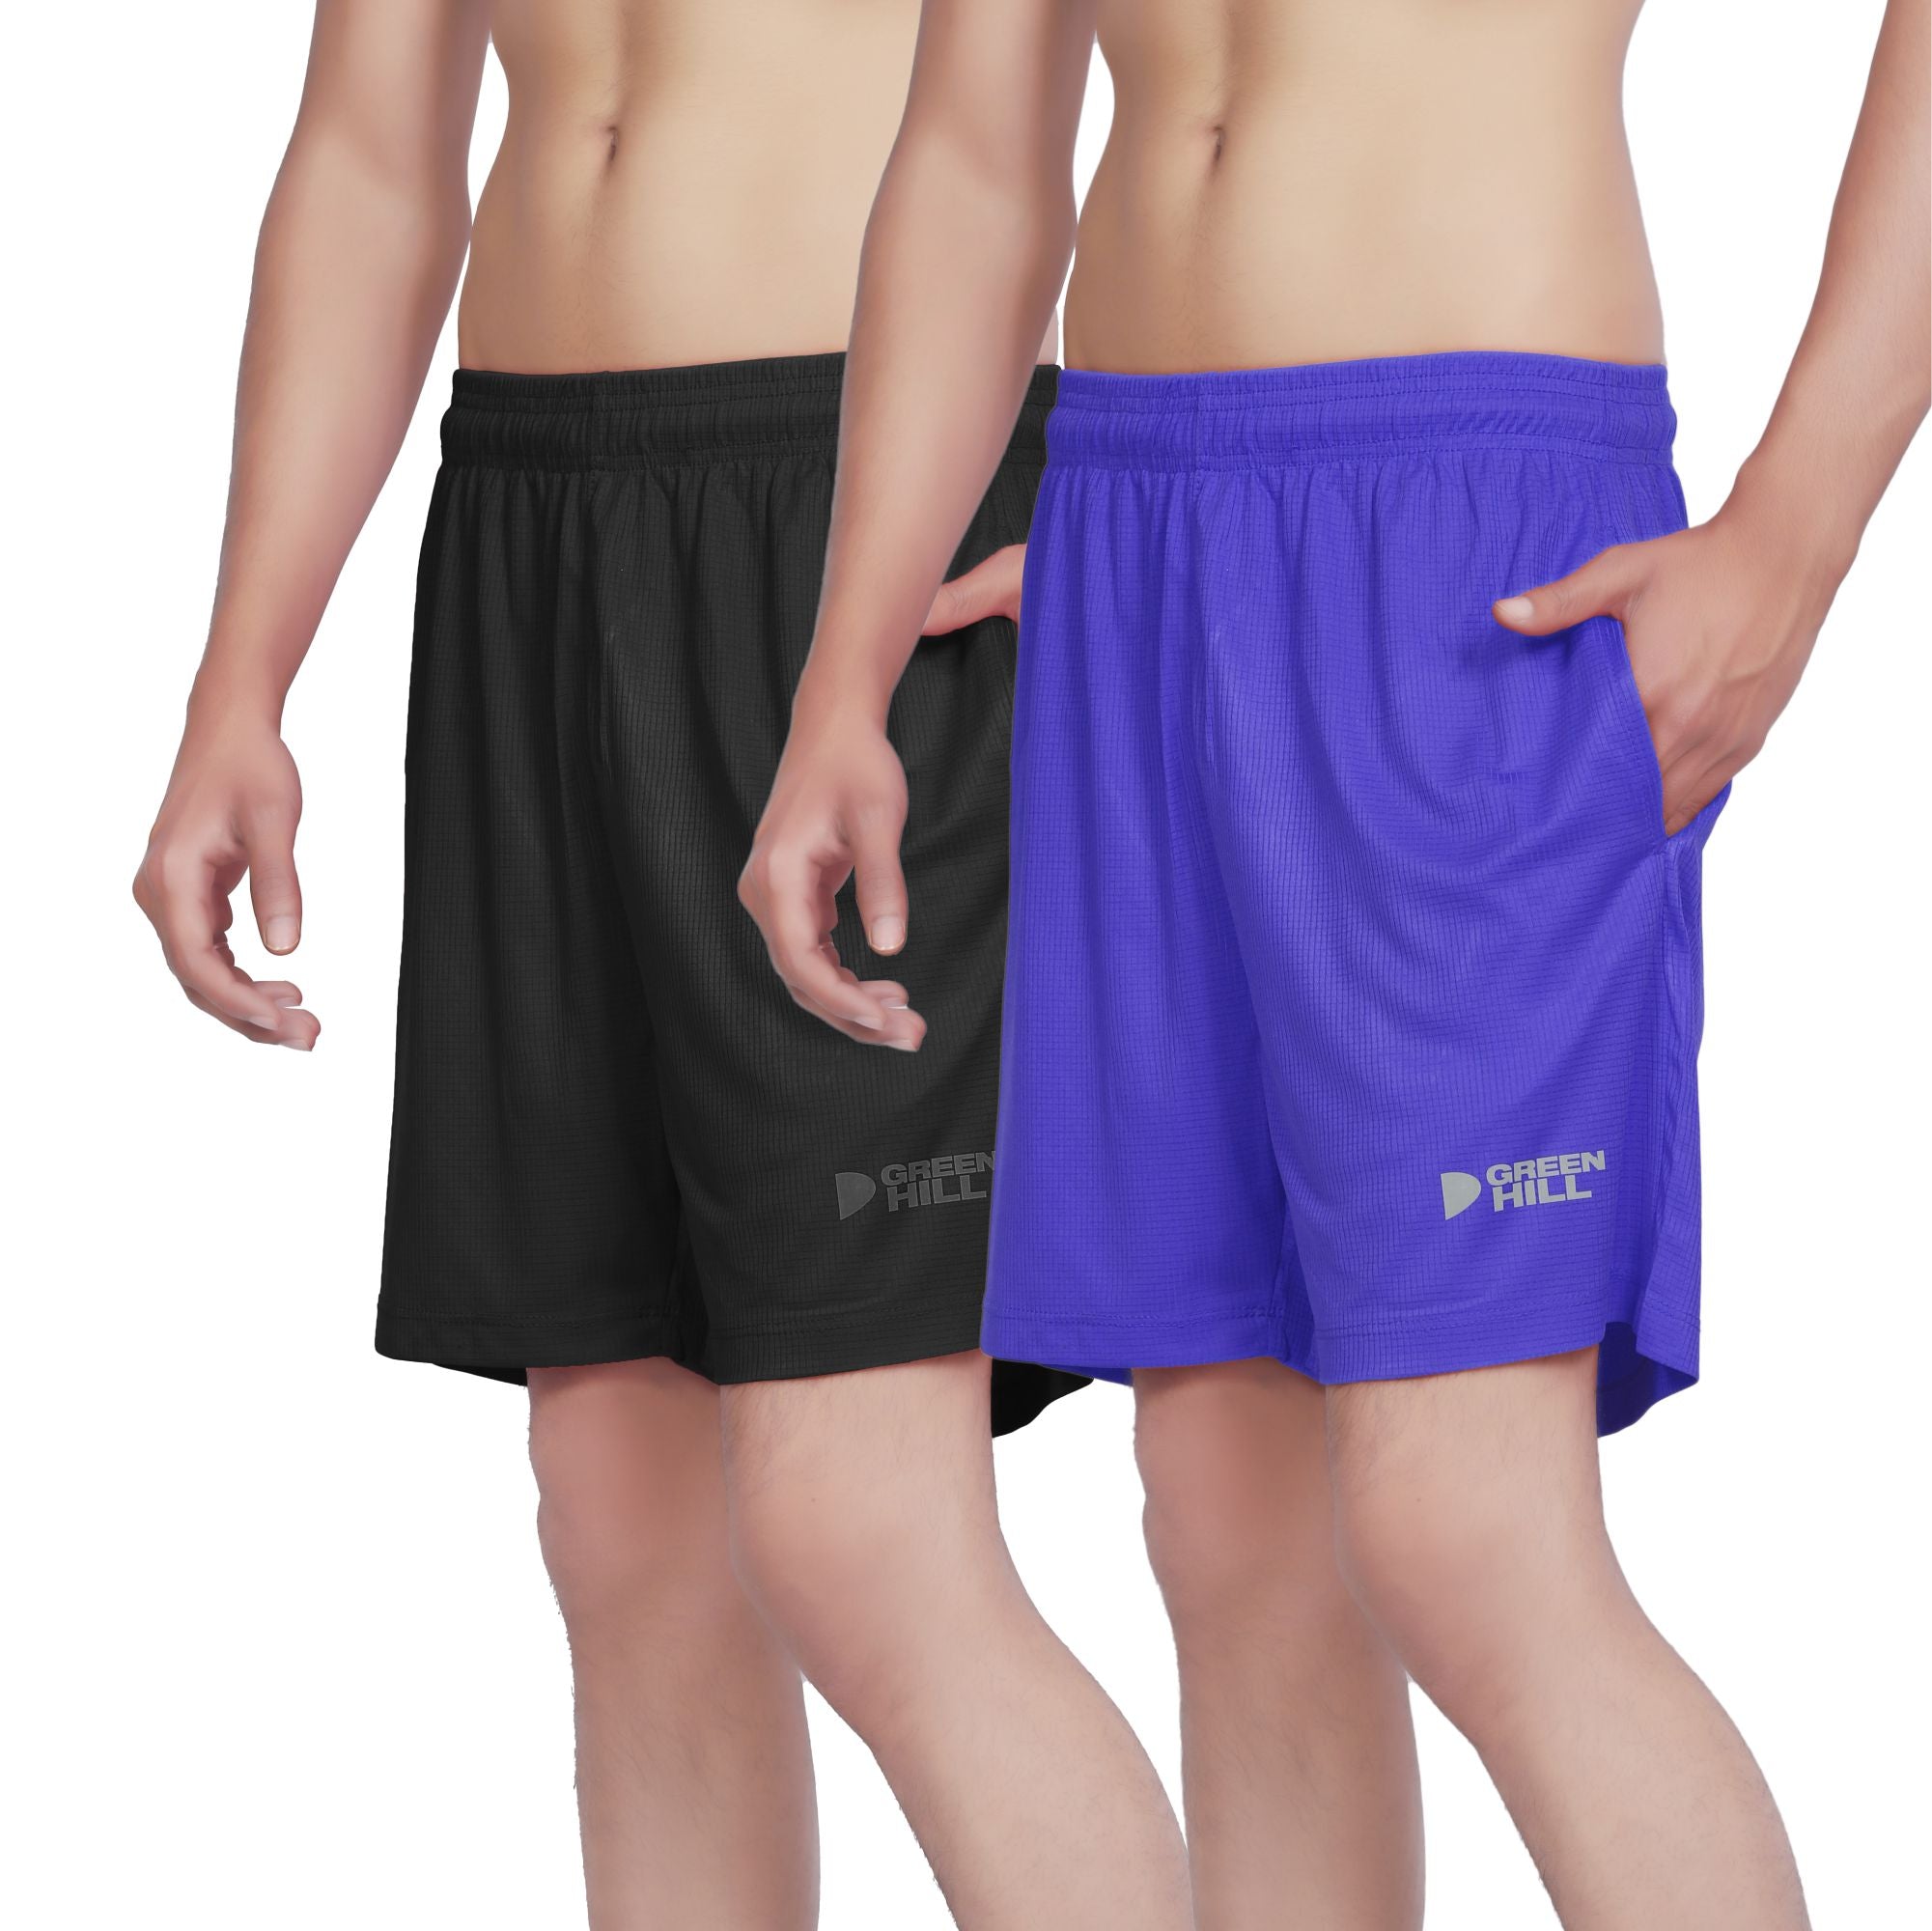 High-Performance Men's Running Gym Shorts